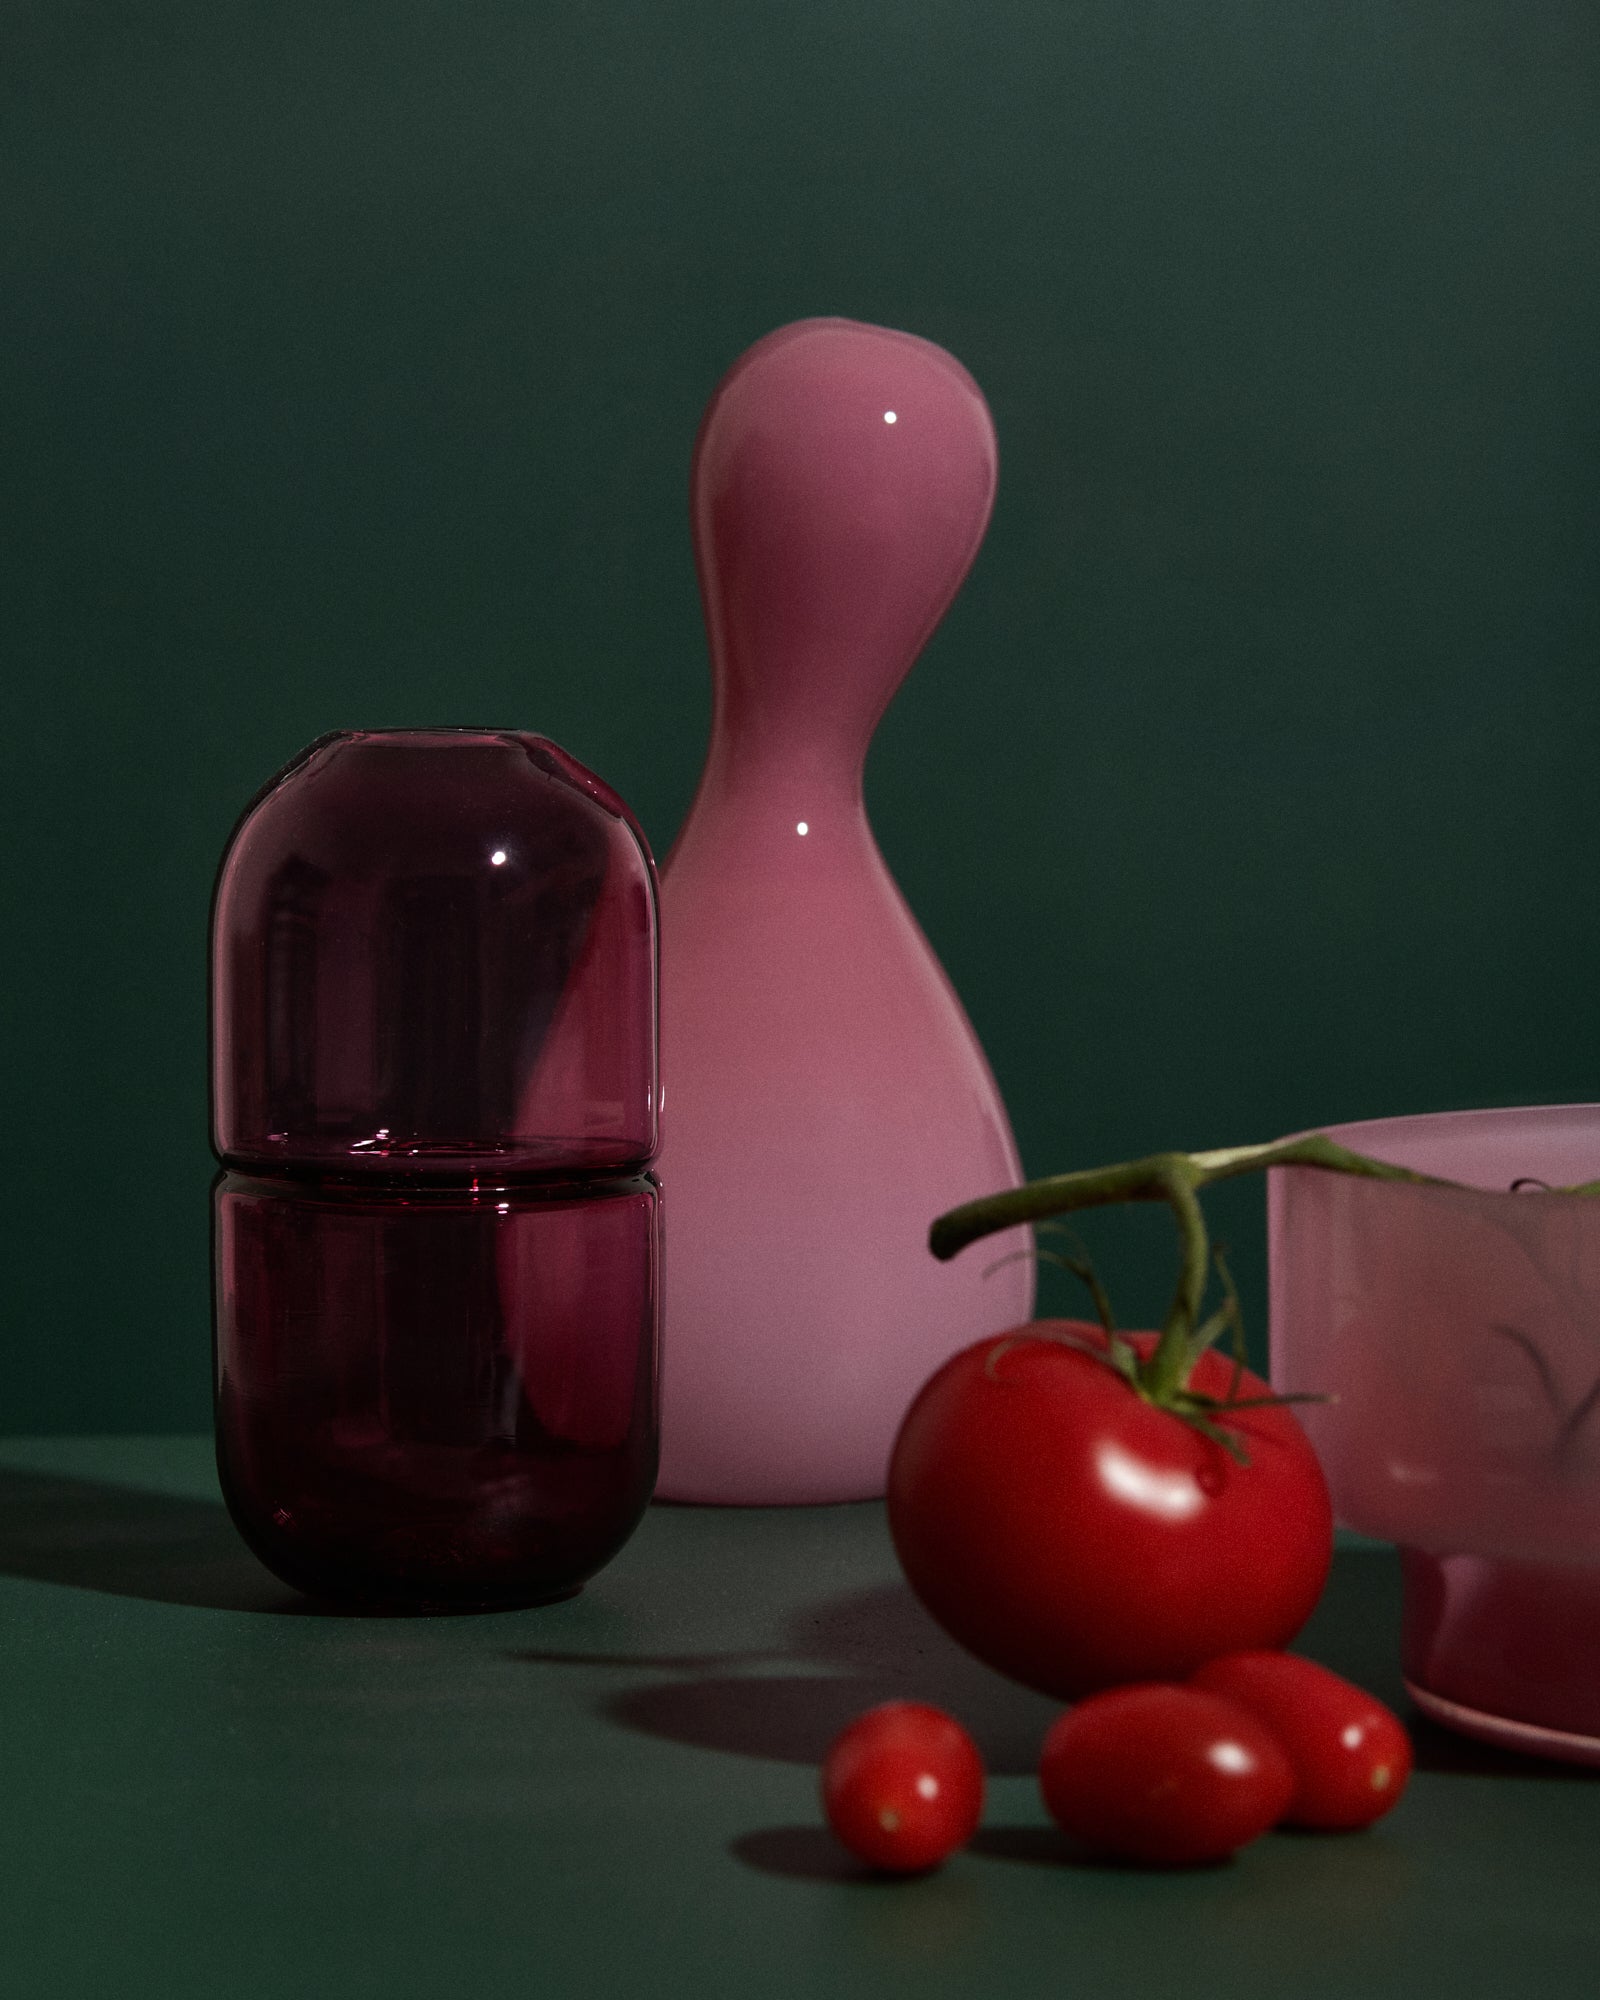 Sugarpill Vase in Cherry